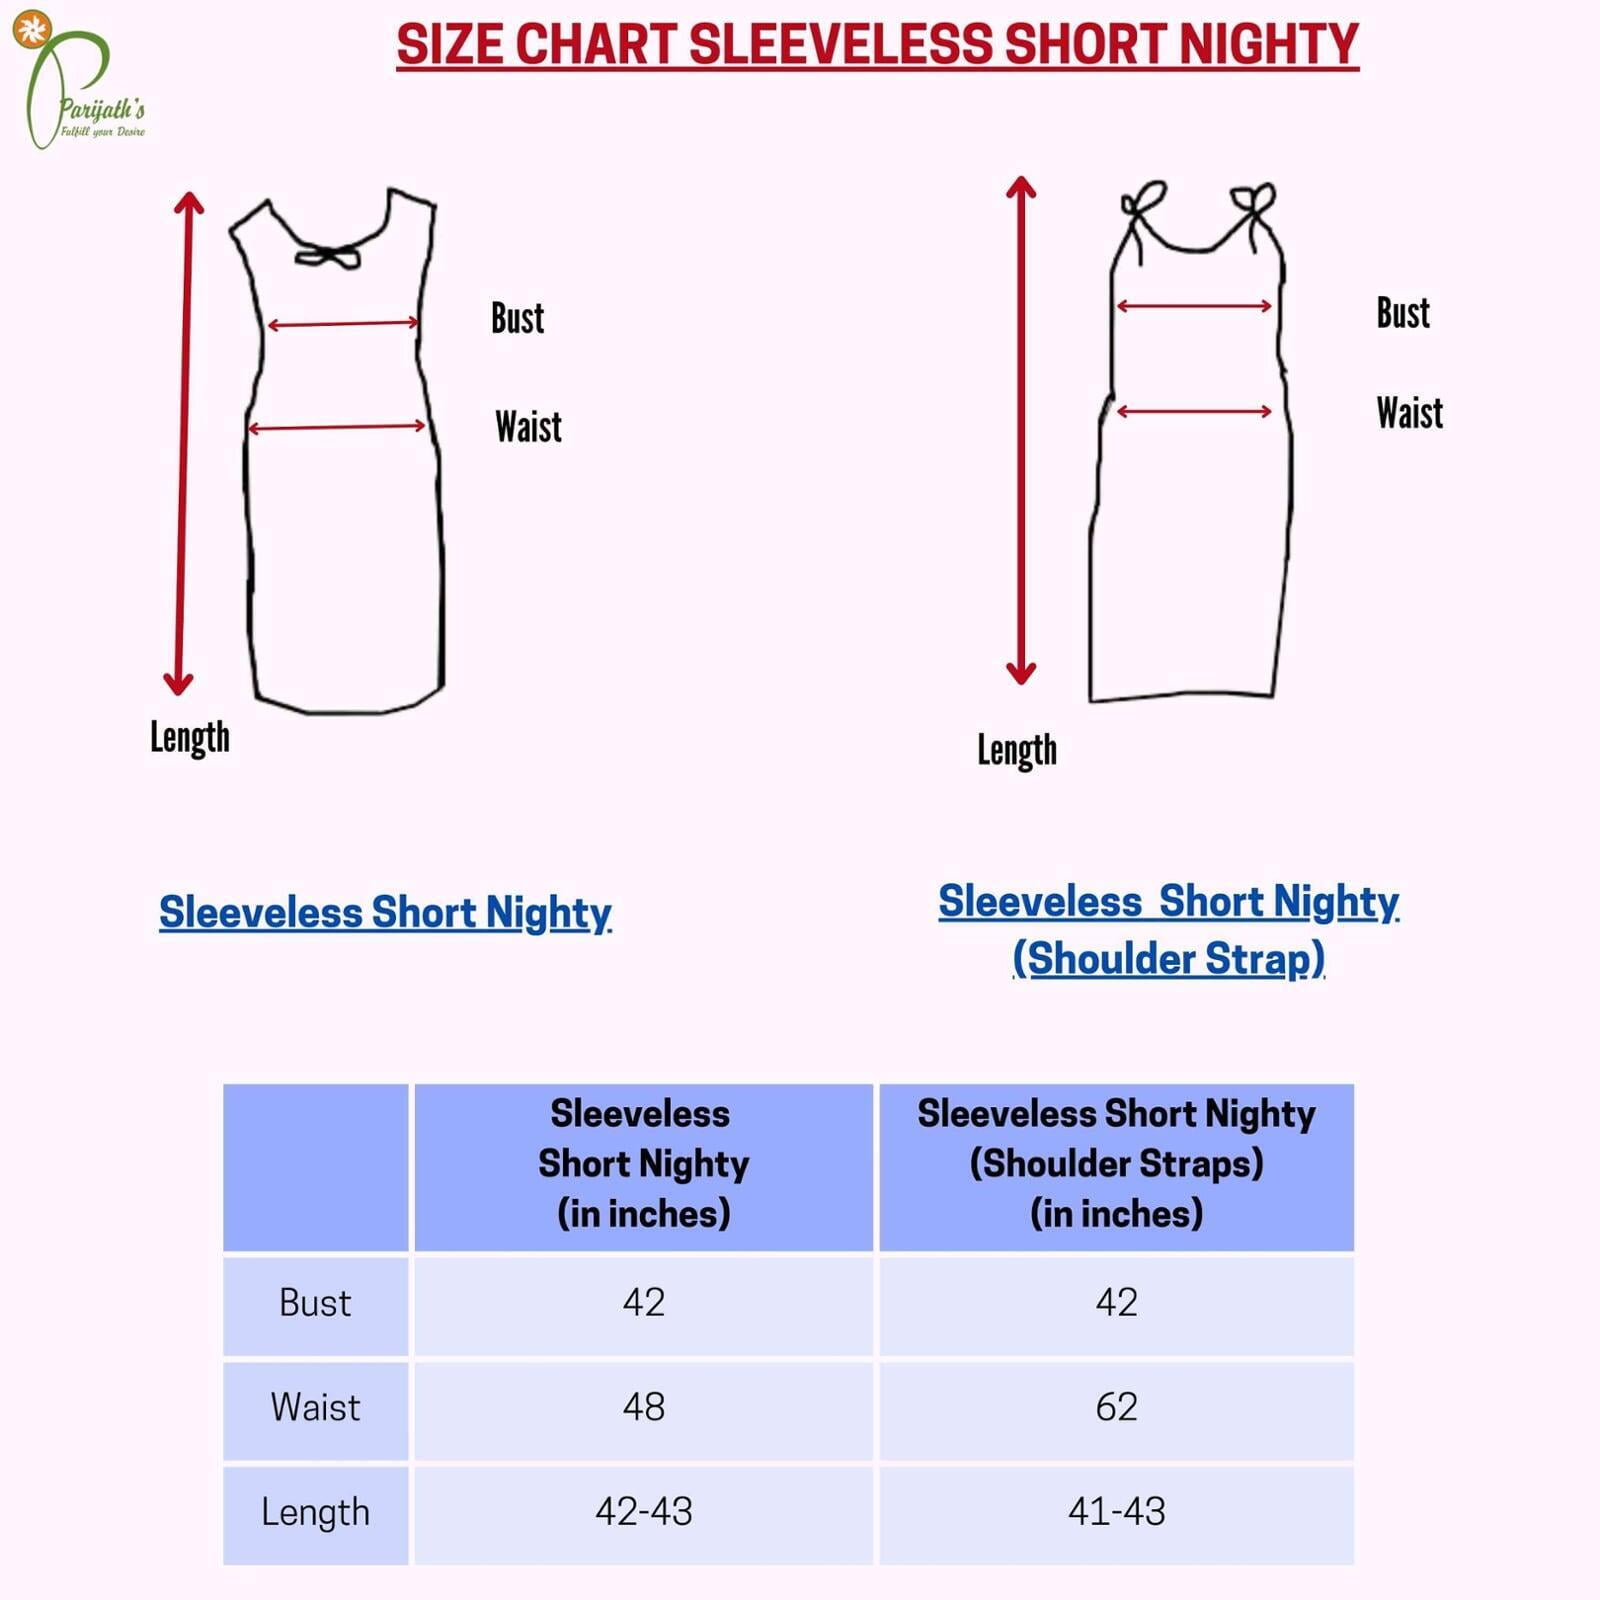 sleeveless short nighty size chart